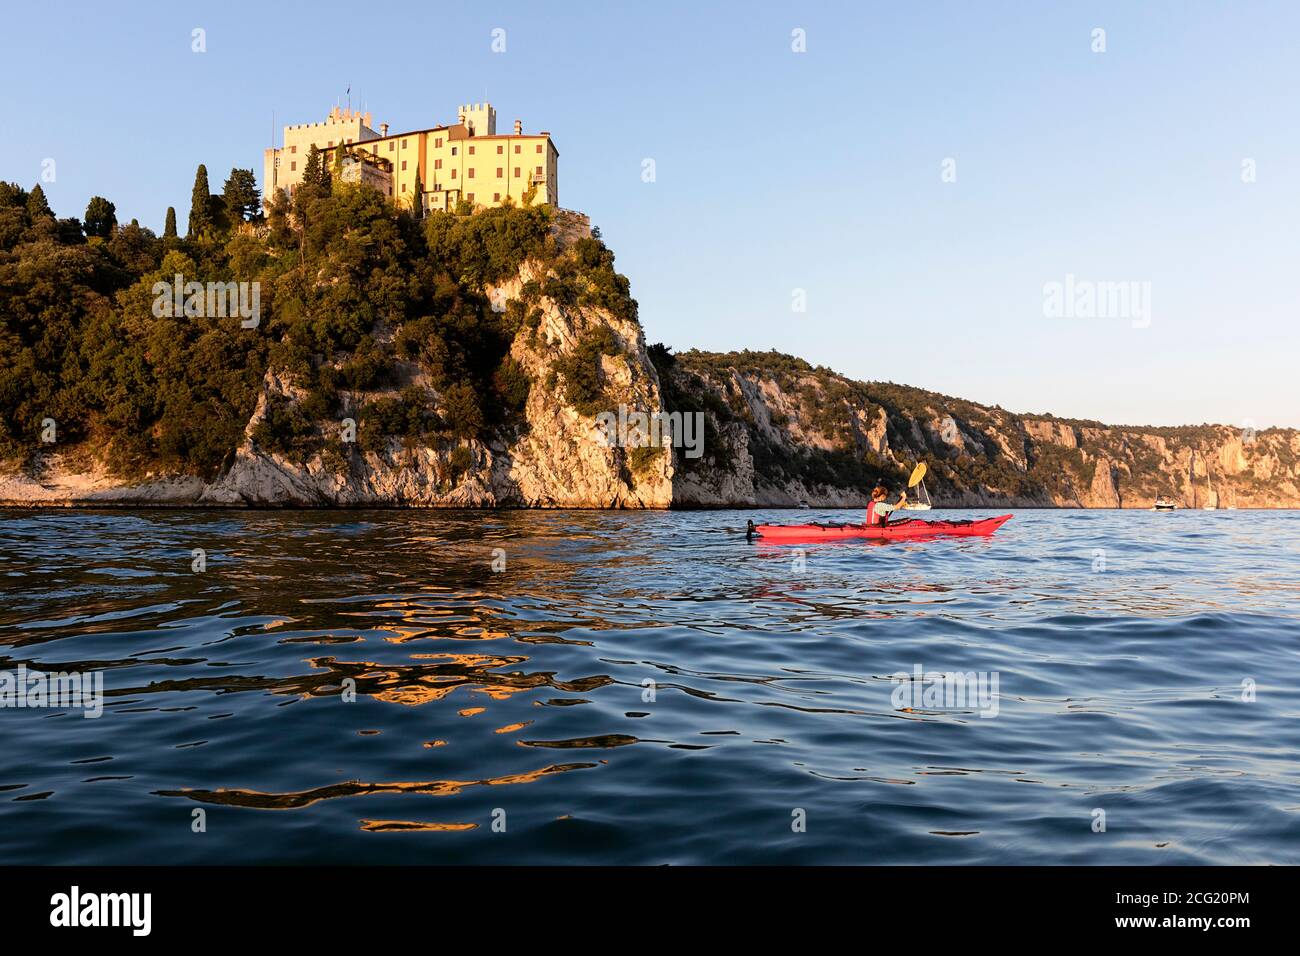 Woman in red kayak kayaking under the Duino Castle, Mediterranean, Trieste,  Italy Stock Photo - Alamy